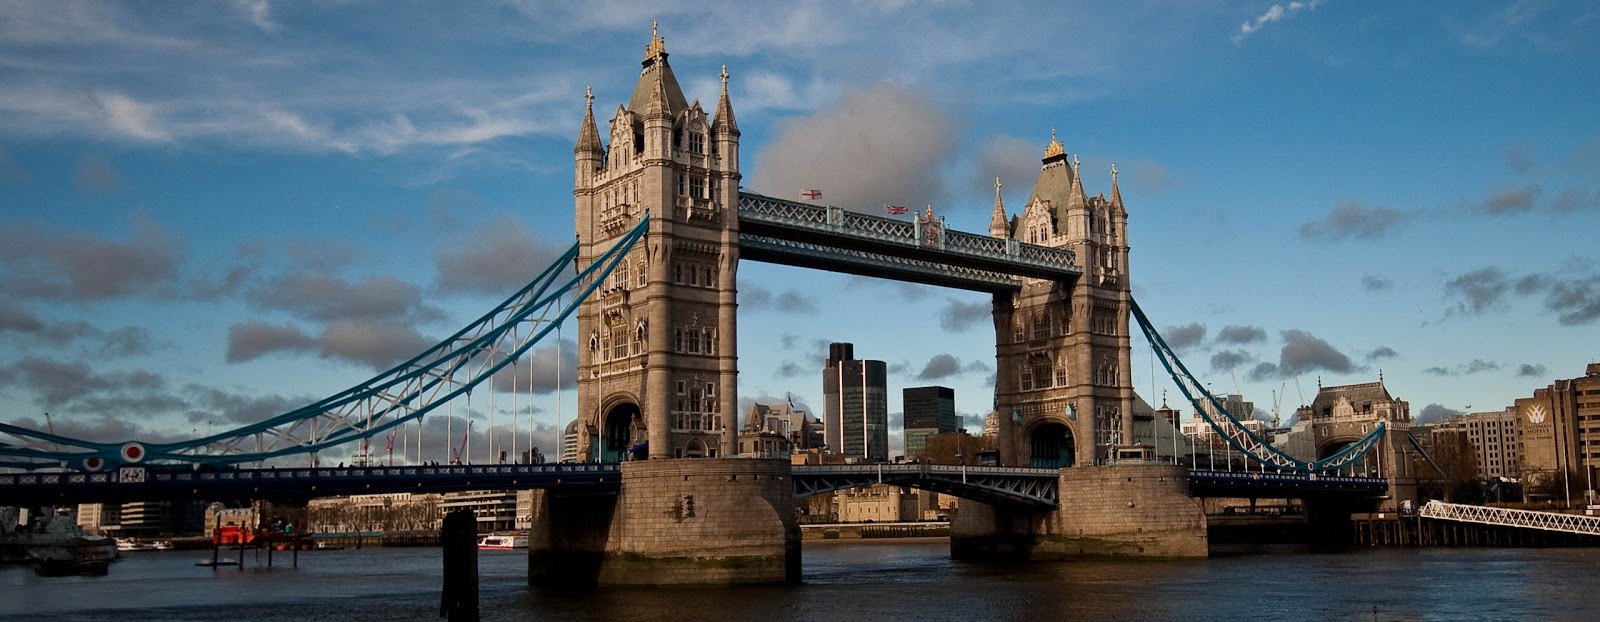 Tower Bridge London Icon Suspension River Thames